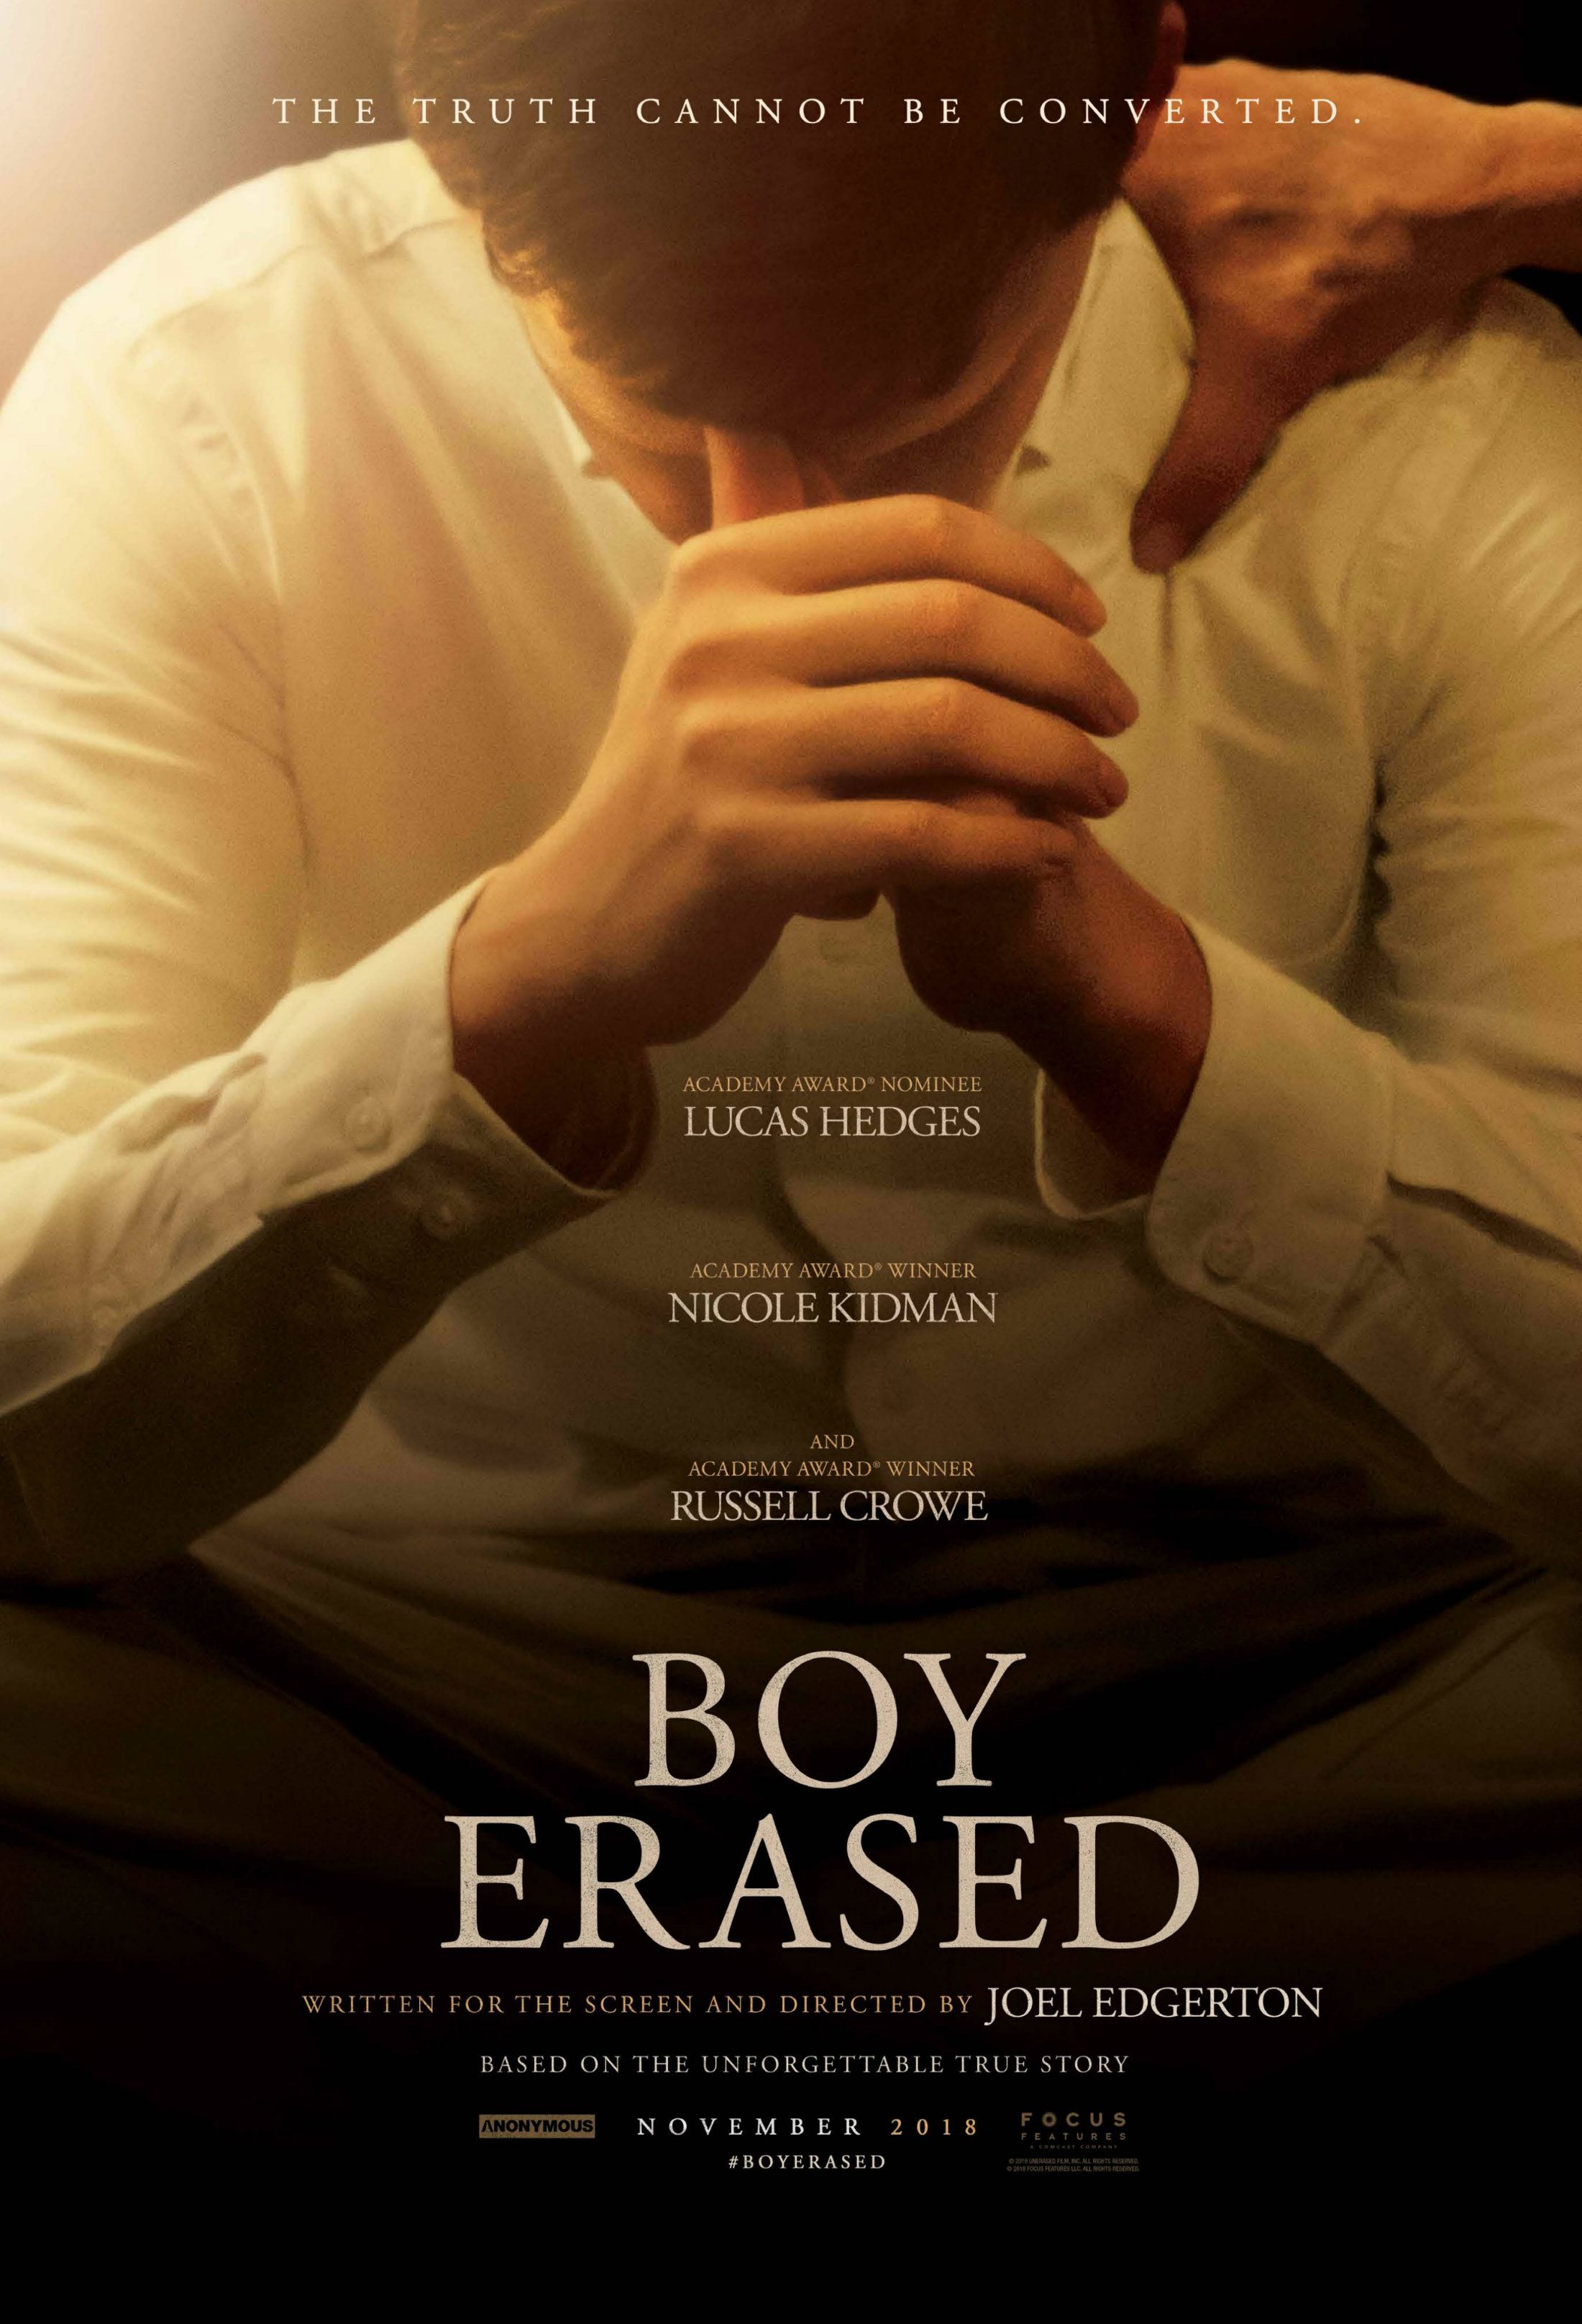 Joel Edgerton's Boy Erased Movie Gets a Trailer & Poster